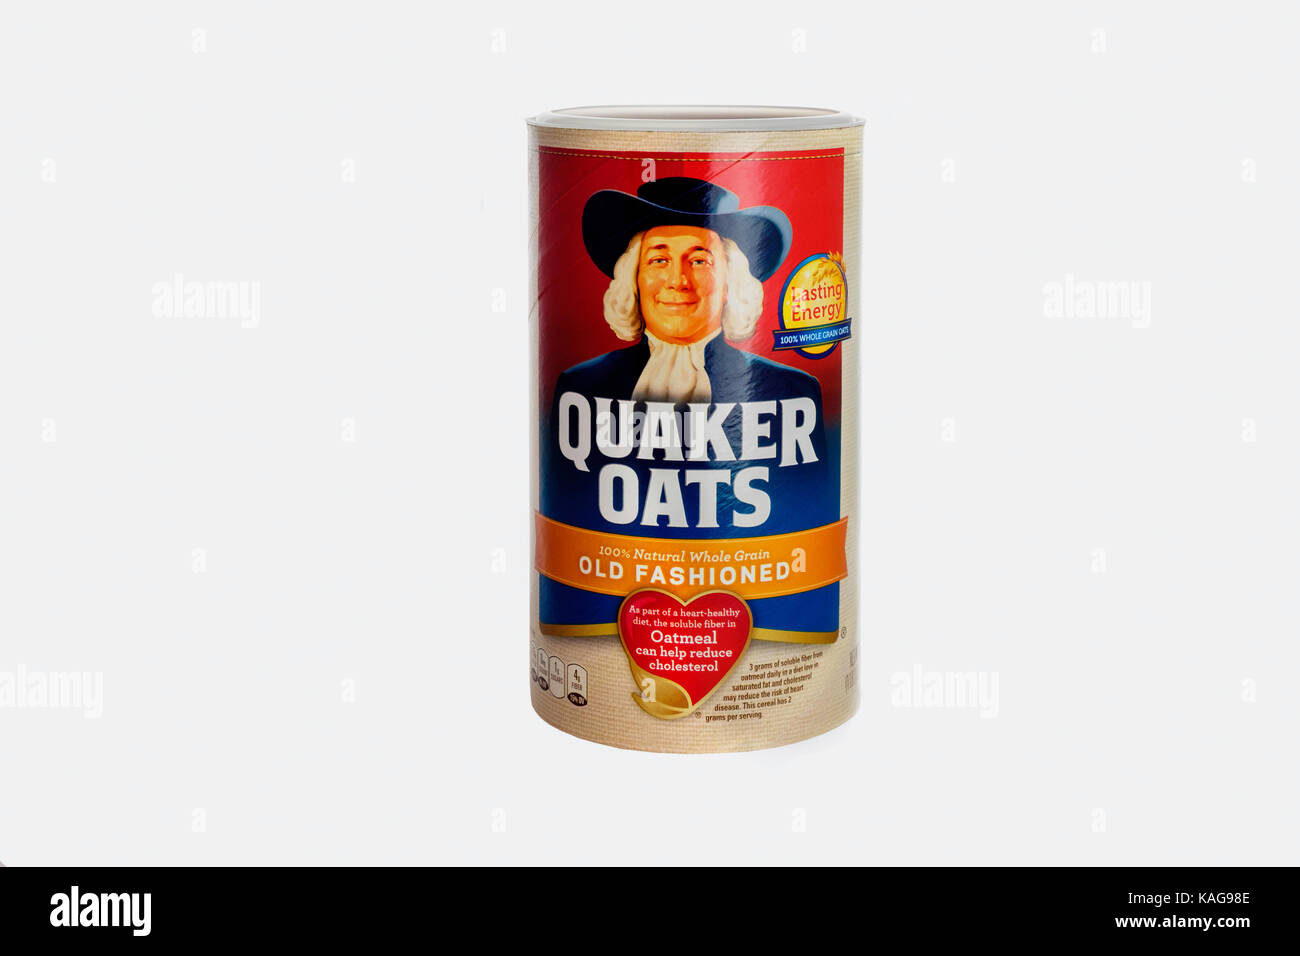 https://c8.alamy.com/comp/KAG98E/a-box-of-old-fashioned-quaker-oats-on-a-white-background-cut-out-cutout-KAG98E.jpg